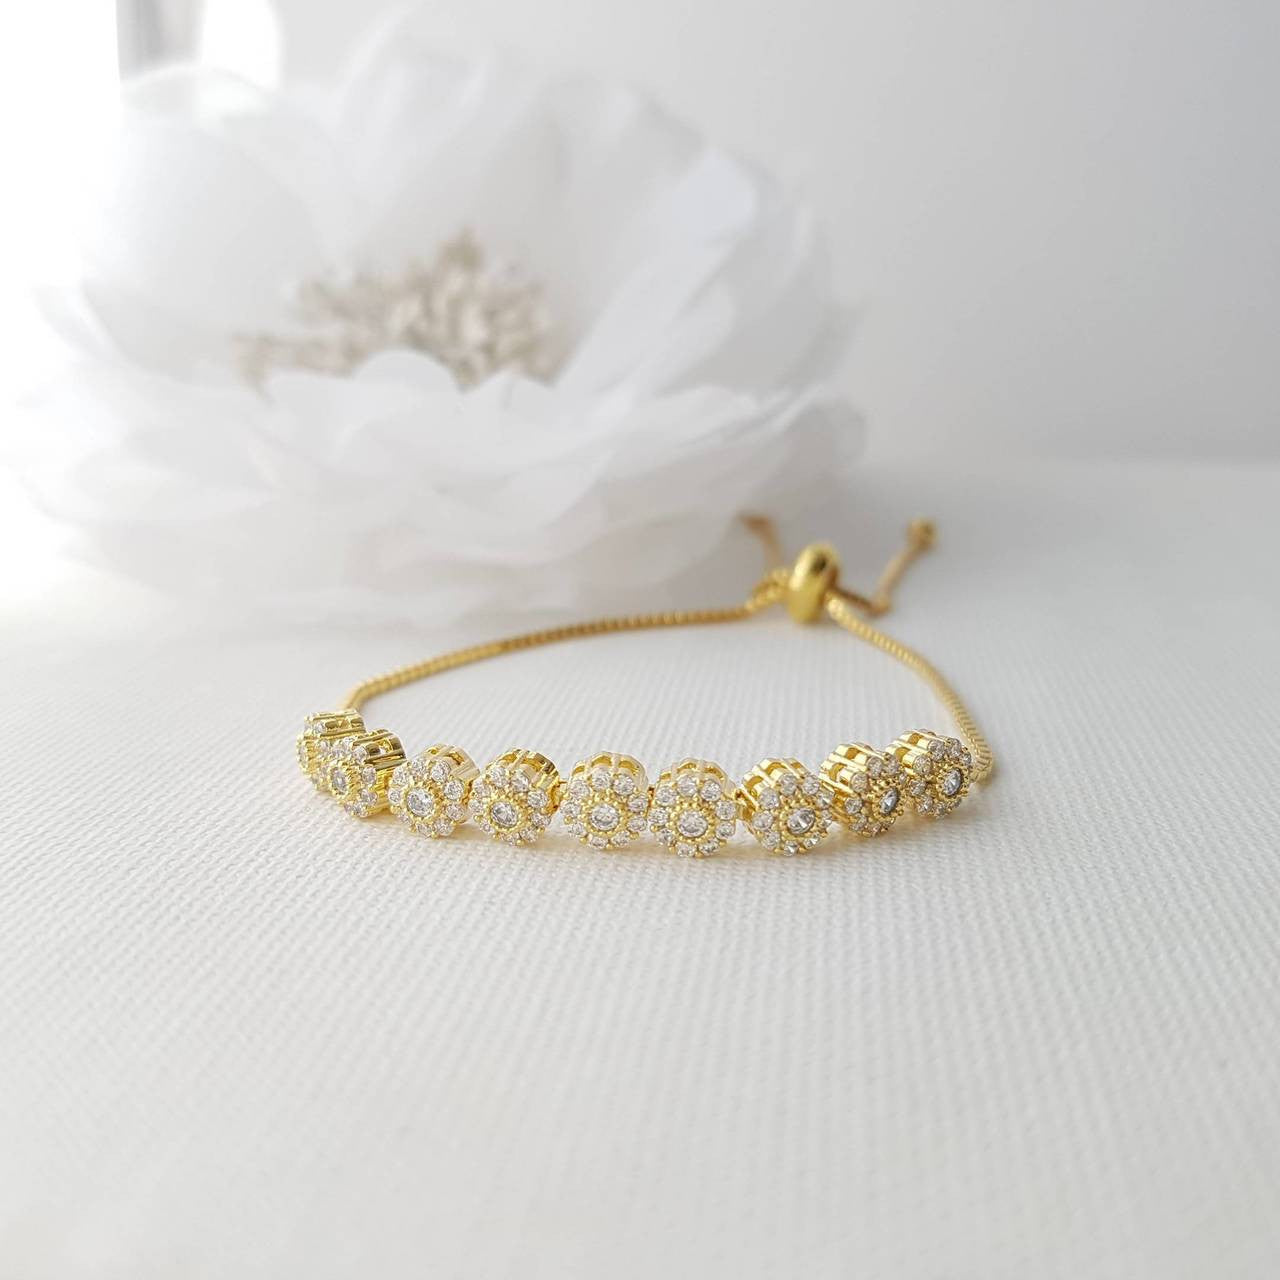 Bridal Bracelet, Wedding Jewelry, Rose Gold, Gold, Bangle Bracelet, Halo Style, Wedding Bracelet, Adjustable Bracelet, Reagan Bracelet